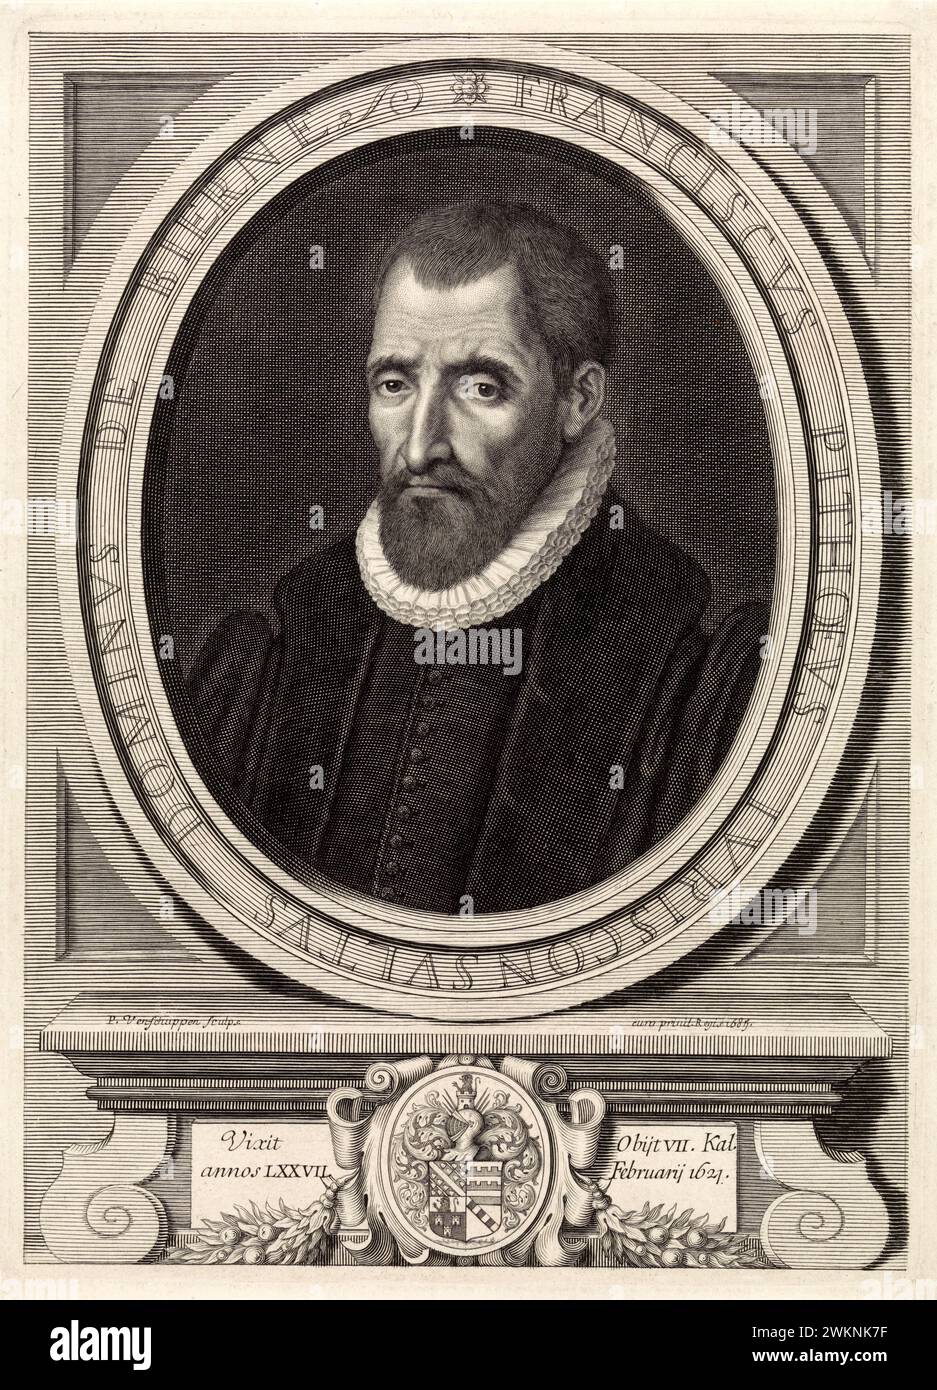 1585 c. , FRANCE : The italian jurist , historian and writer  François PITHOU ( 1543 - 1621 ), young bother of  Pierre Pithou ( 1543 - 1596 ). Portrait engraved by  Pieter van Schuppen , pubblished in 1685 , Paris . - HISTORY - FOTO STORICHE - HISTORIAN - STORICO - SCRITTORE - WRITER - LETTERATURA - LITERATURE - giureconsulto - GIURISTA - LEGGE - LAY - nobili - nobiltà francese - french nobility - FRANCIA - INCISIONE - ENGRAVING - ILLUSTRATION - ILLUSTRAZIONE  - collar - collare - colletto - GORGIERA - pizzo - lace -   beard - barba --- Archivio GBB Stock Photo